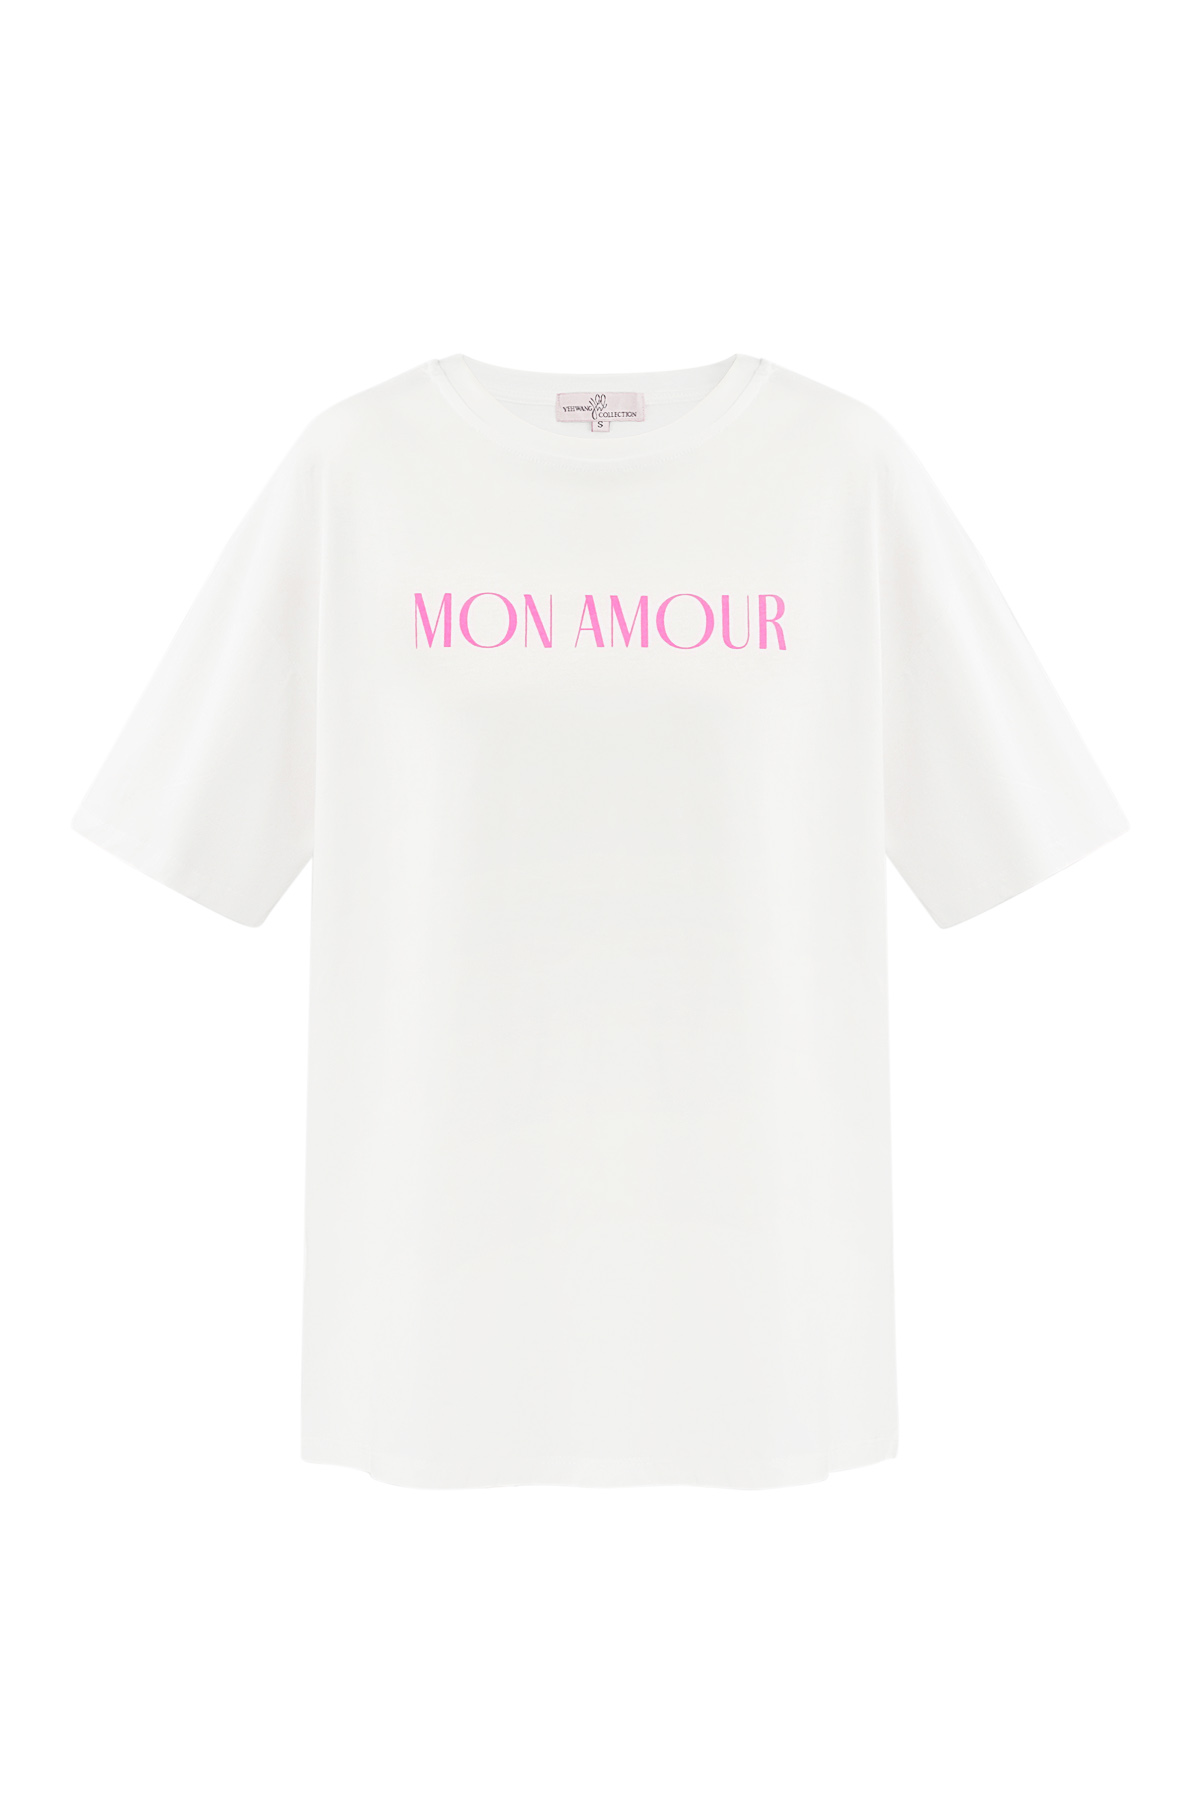 Maglietta mon amour - bianca h5 